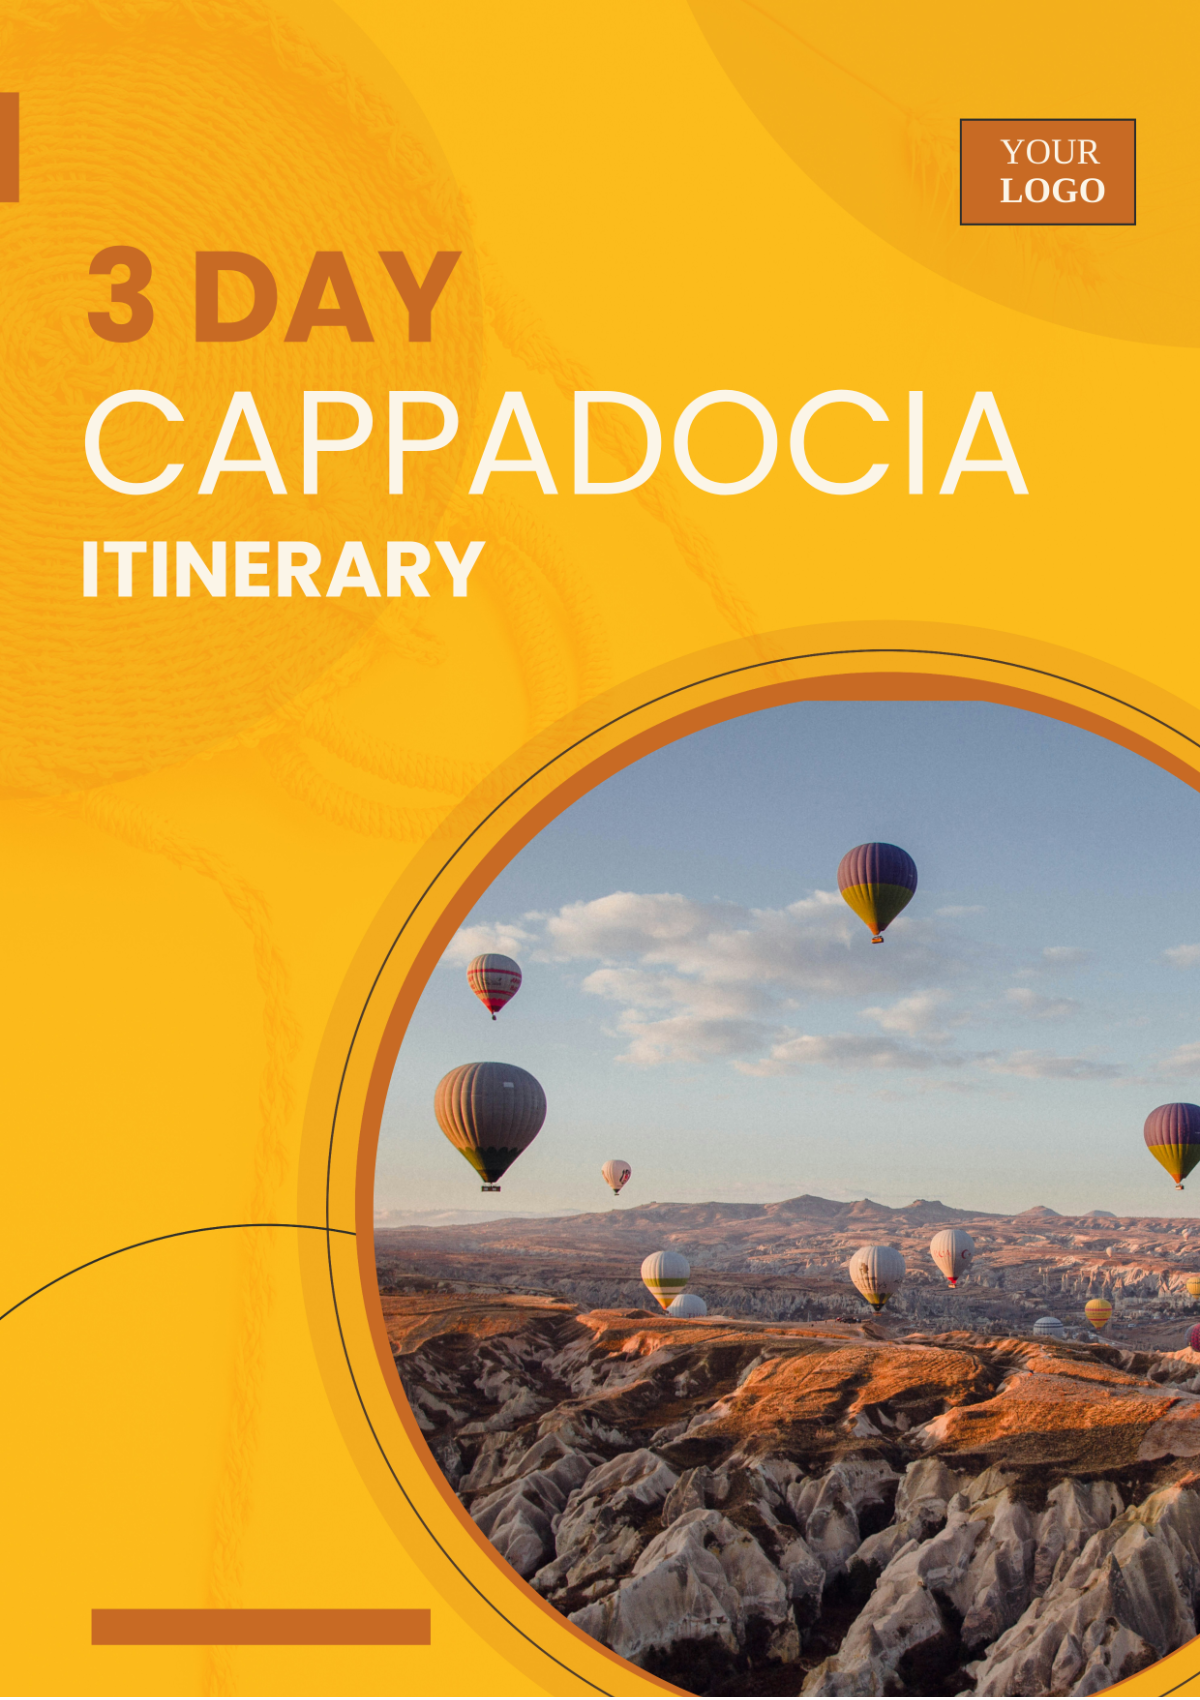 3 Day Cappadocia Itinerary Template